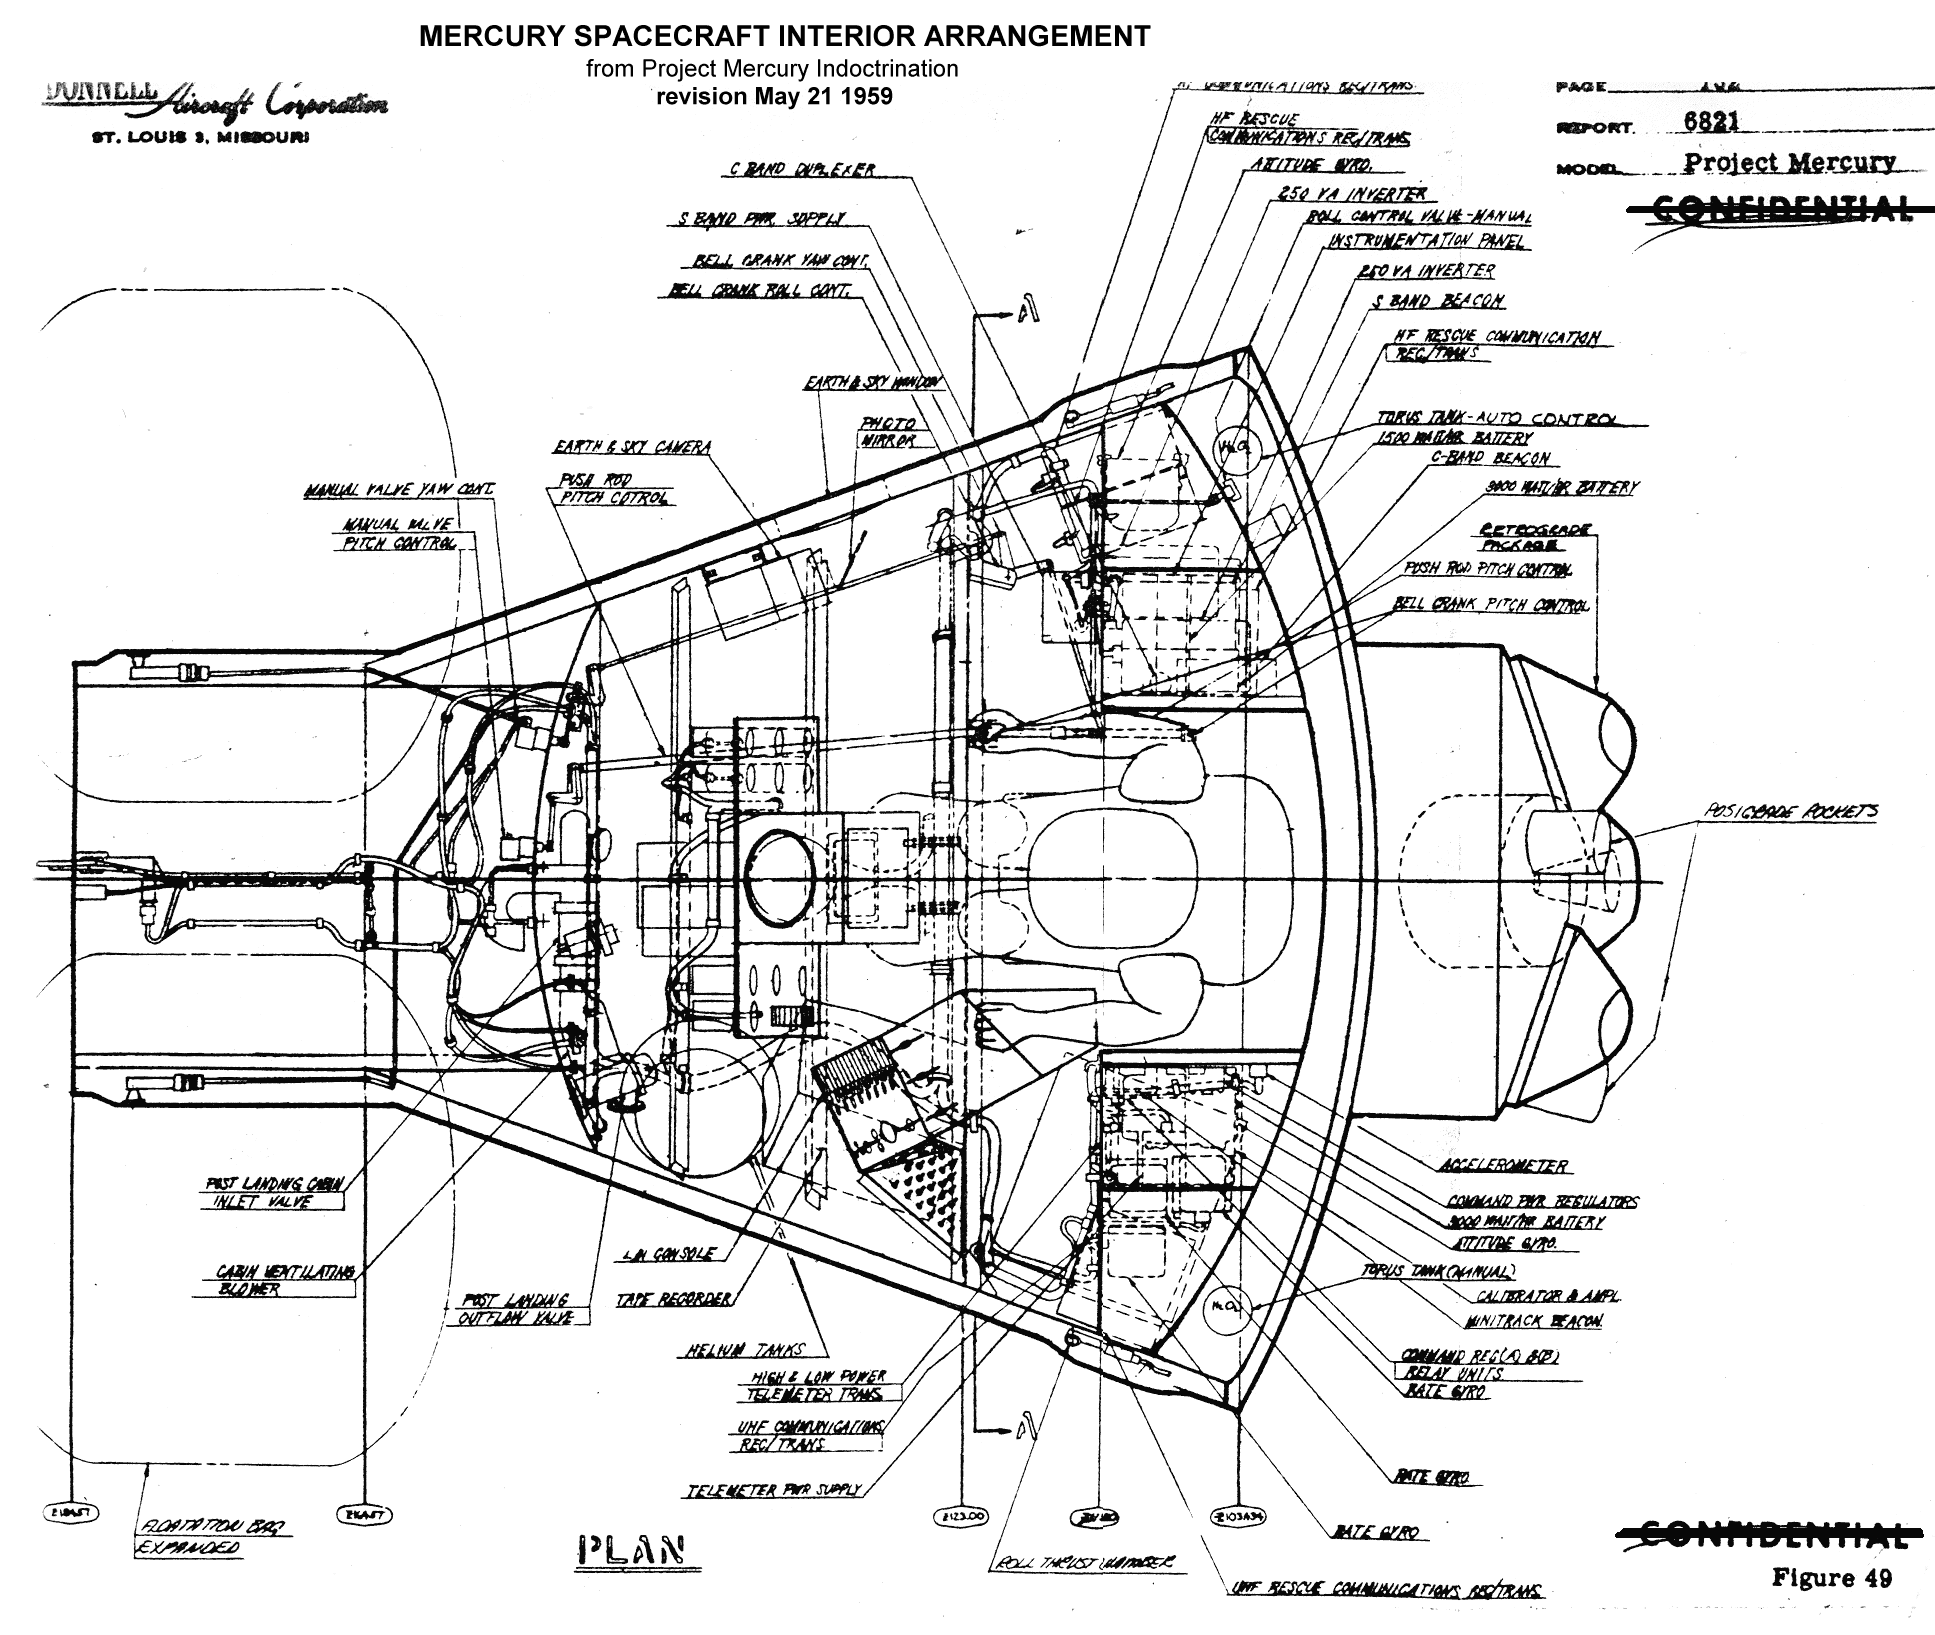 Projects Mercury Spacecraft Interior Arrangement